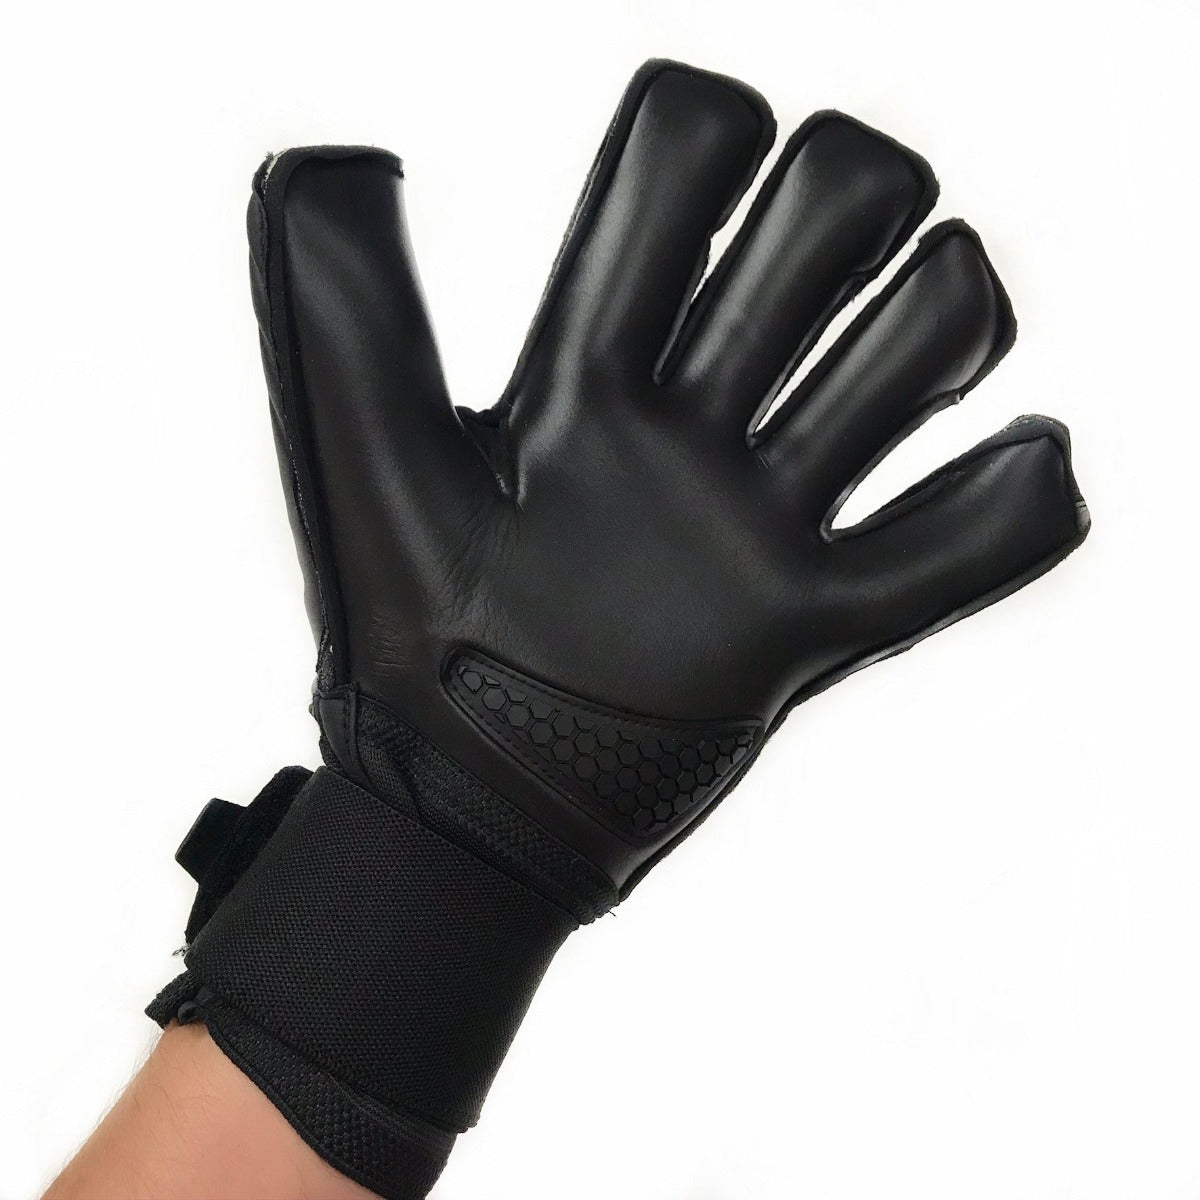 Aviata Youth Halcyon Turf Blackout Goalkeeper Gloves - Black (Single - Inner)